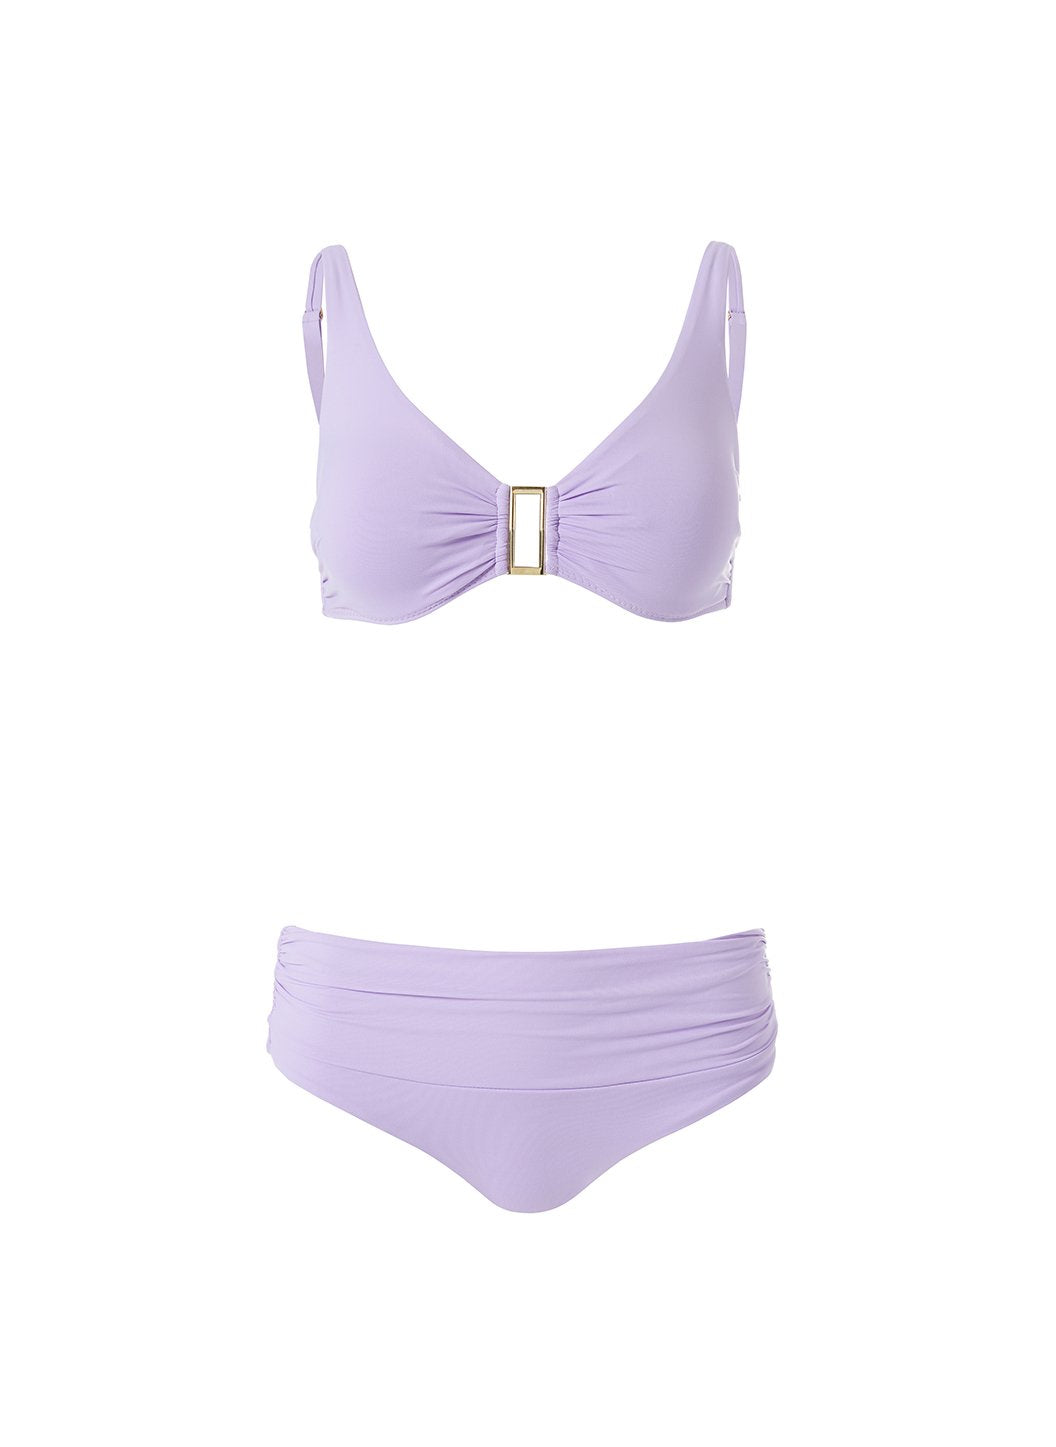 Bel Air Lilac Bikini Bottom